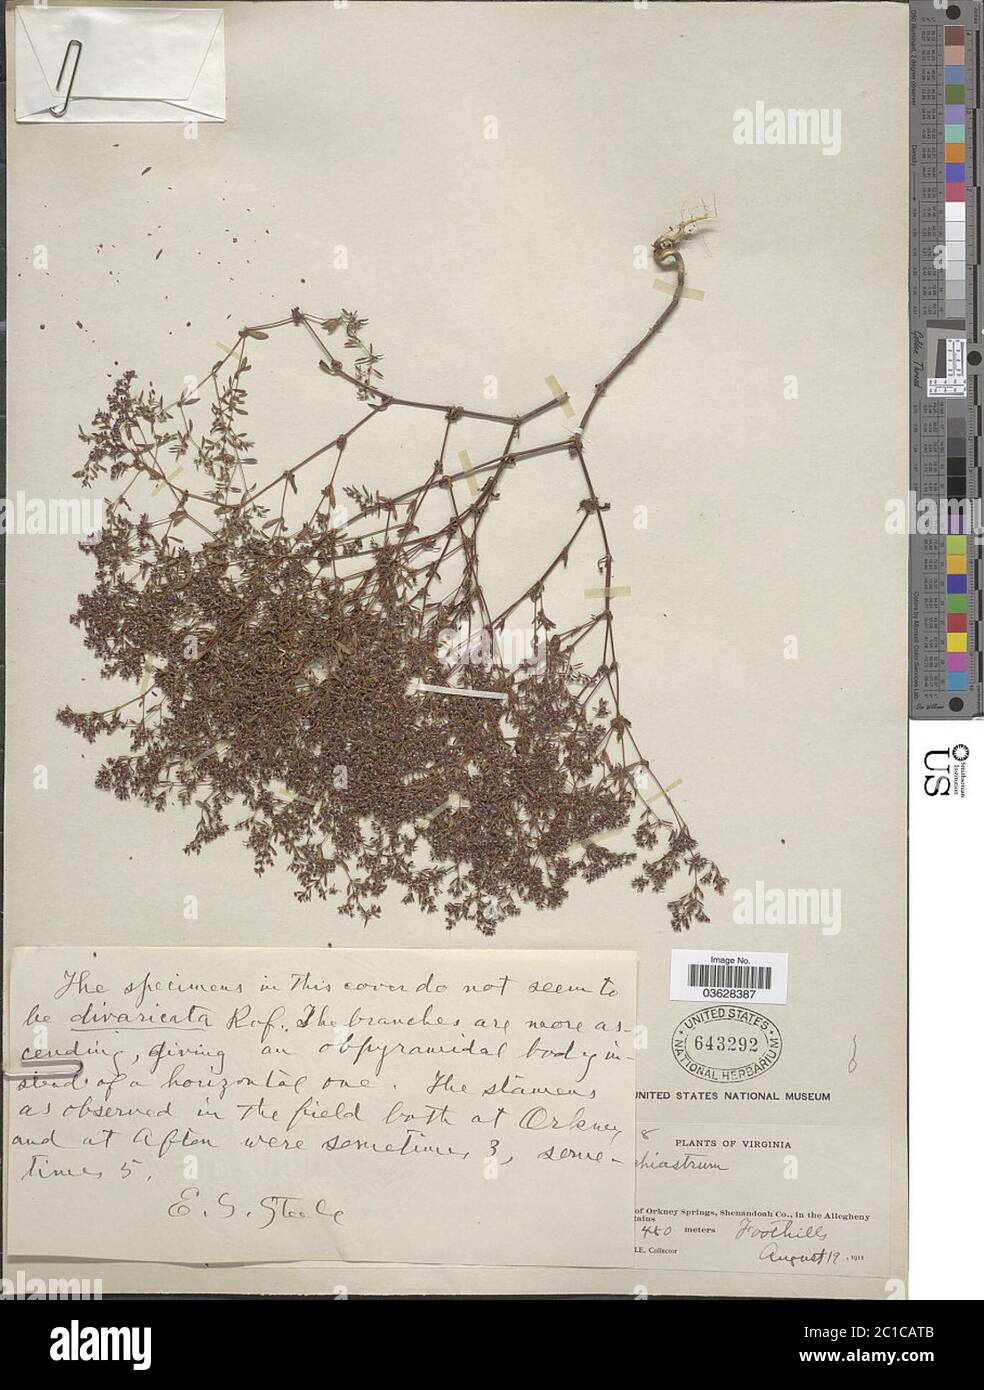 Paronychia fastigiata var pumila Alph Wood Fernald Paronychia fastigiata var pumila Alph Wood Fernald. Stock Photo